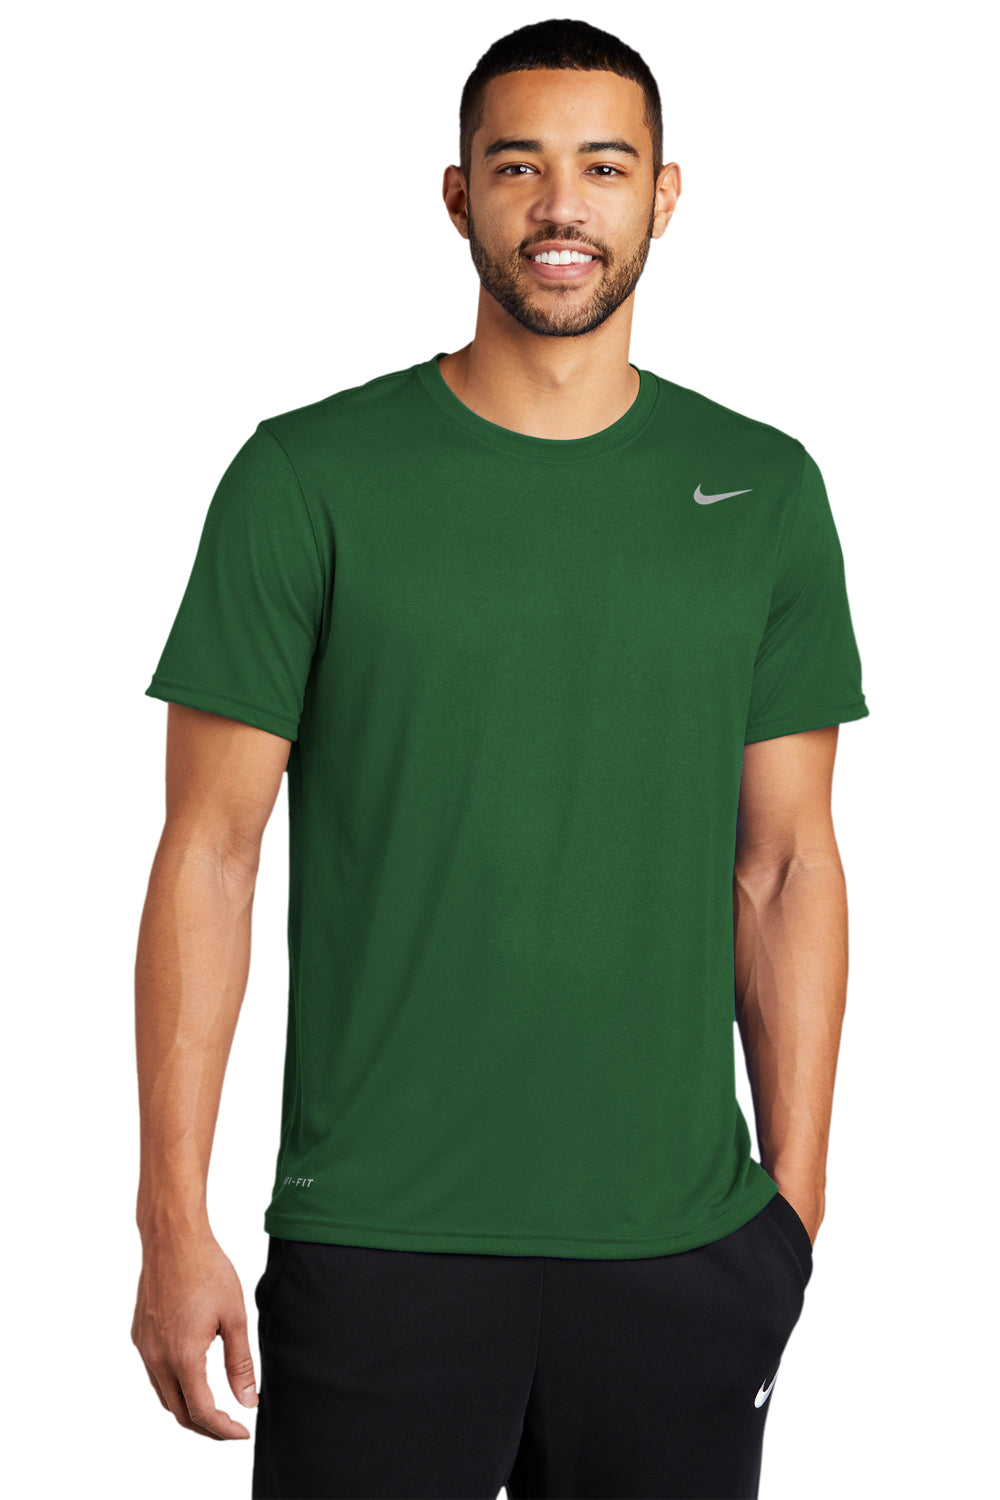 USA Legend Women's Nike Dri-FIT T-Shirt.